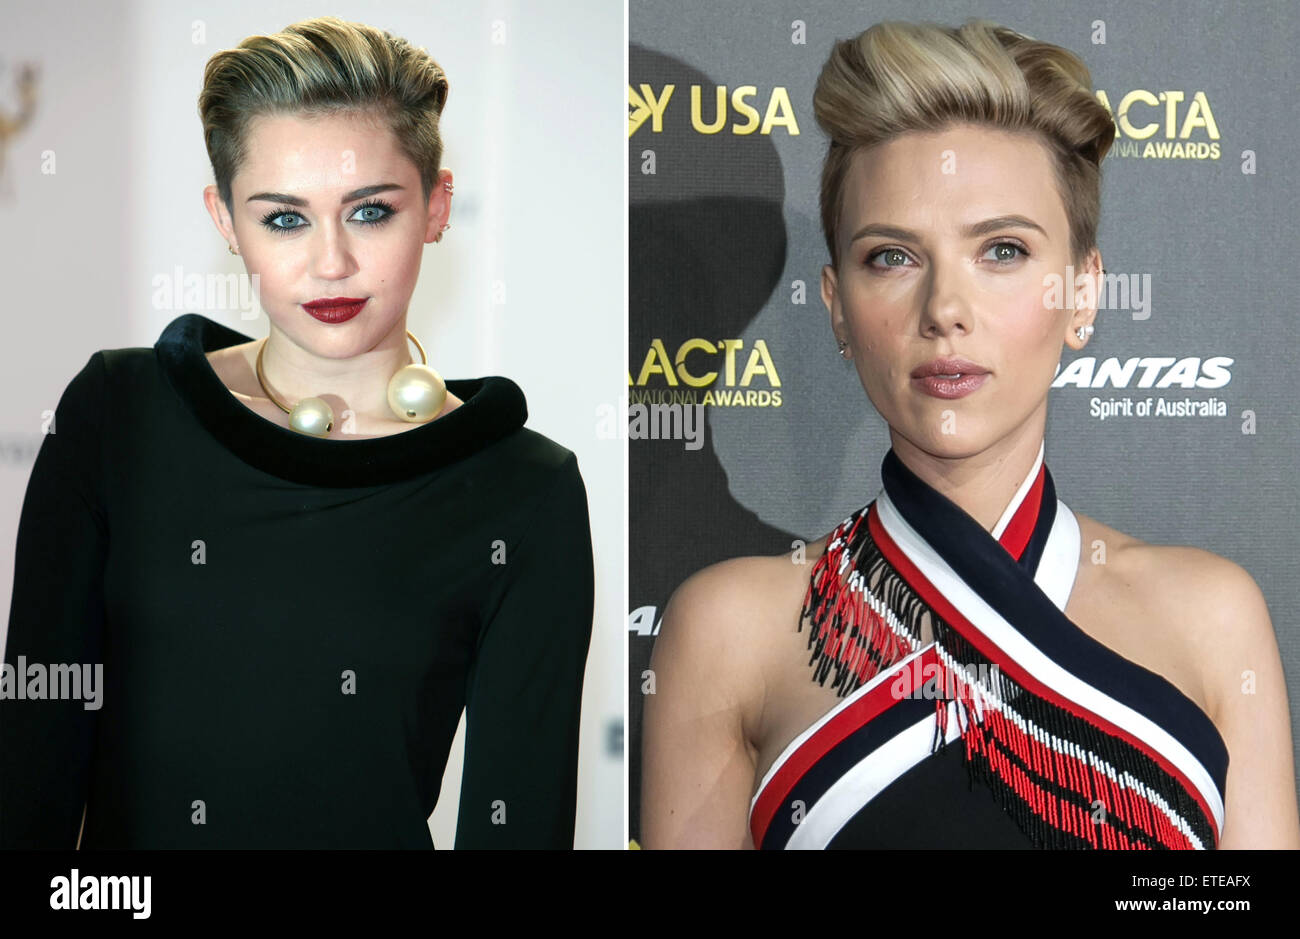 Who Has The Best Hair Miley Cyrus Or Scarlett Johansson Bambi